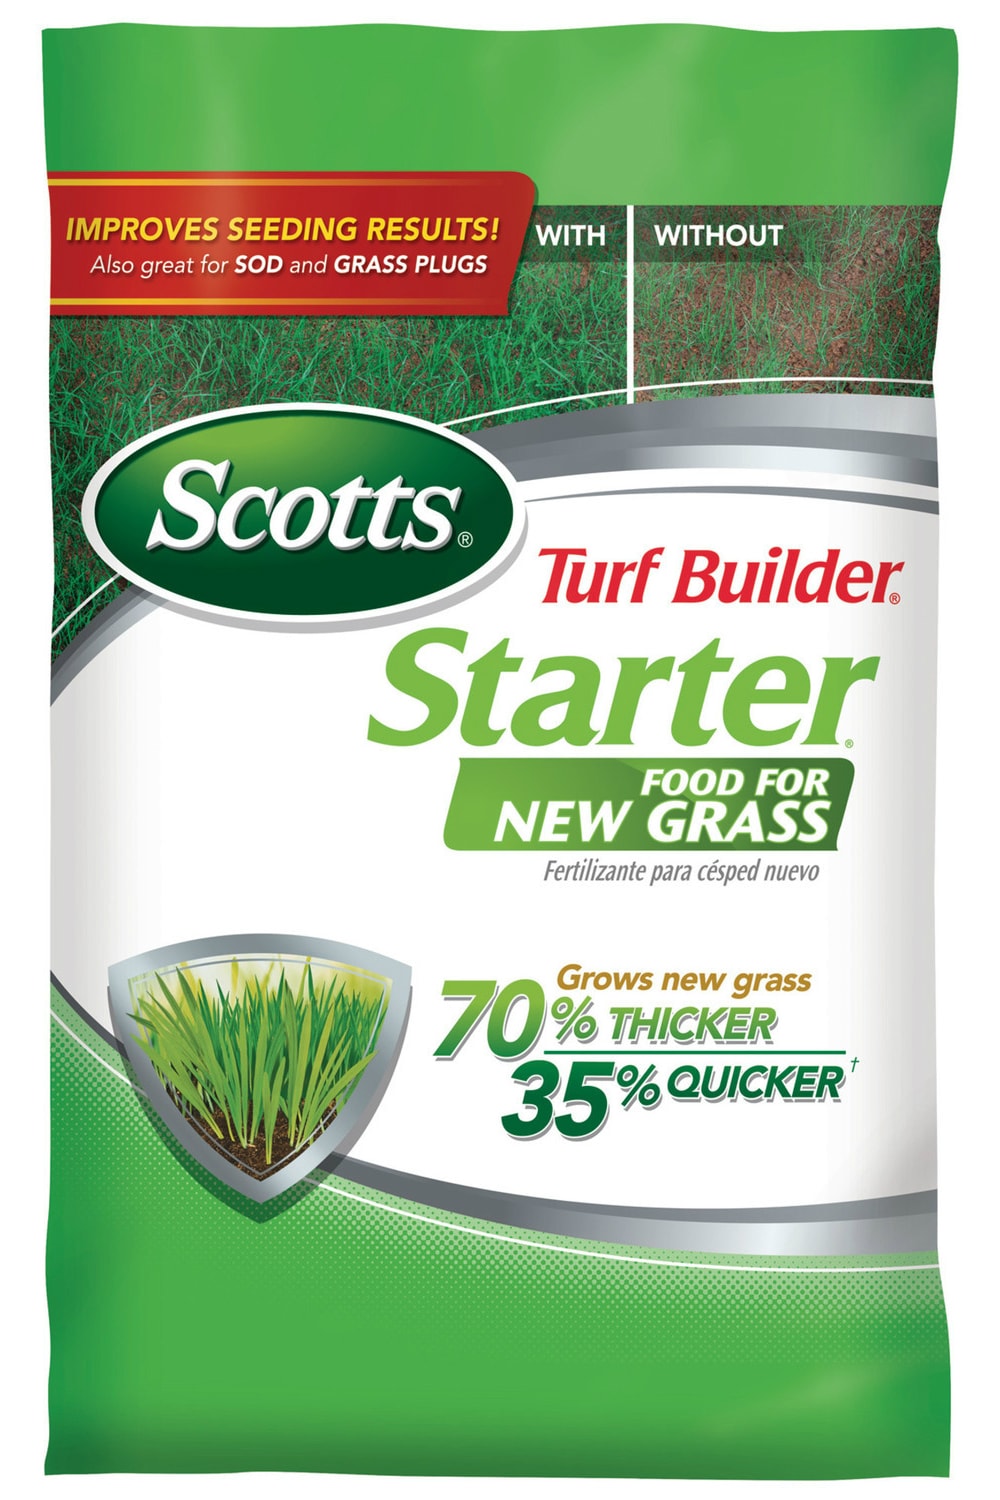 Image of Scotts Turf Builder Starter Food for New Grass fertilizer